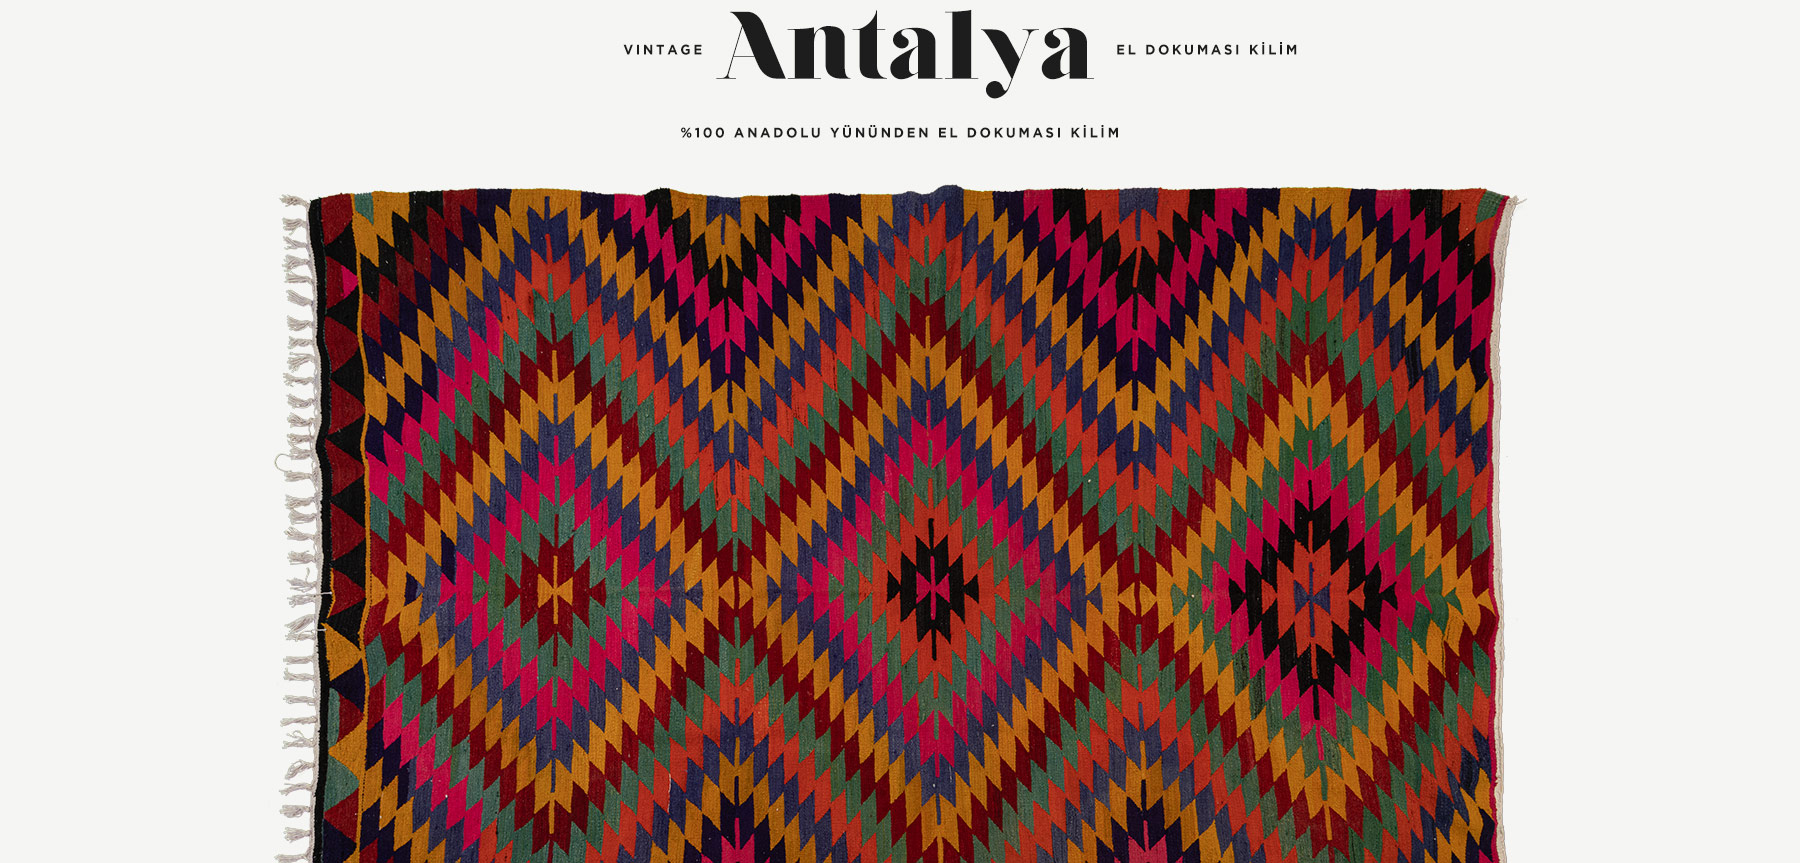 Vintage Antalya El Dokuması Kilim 5,44 m2'in resmi